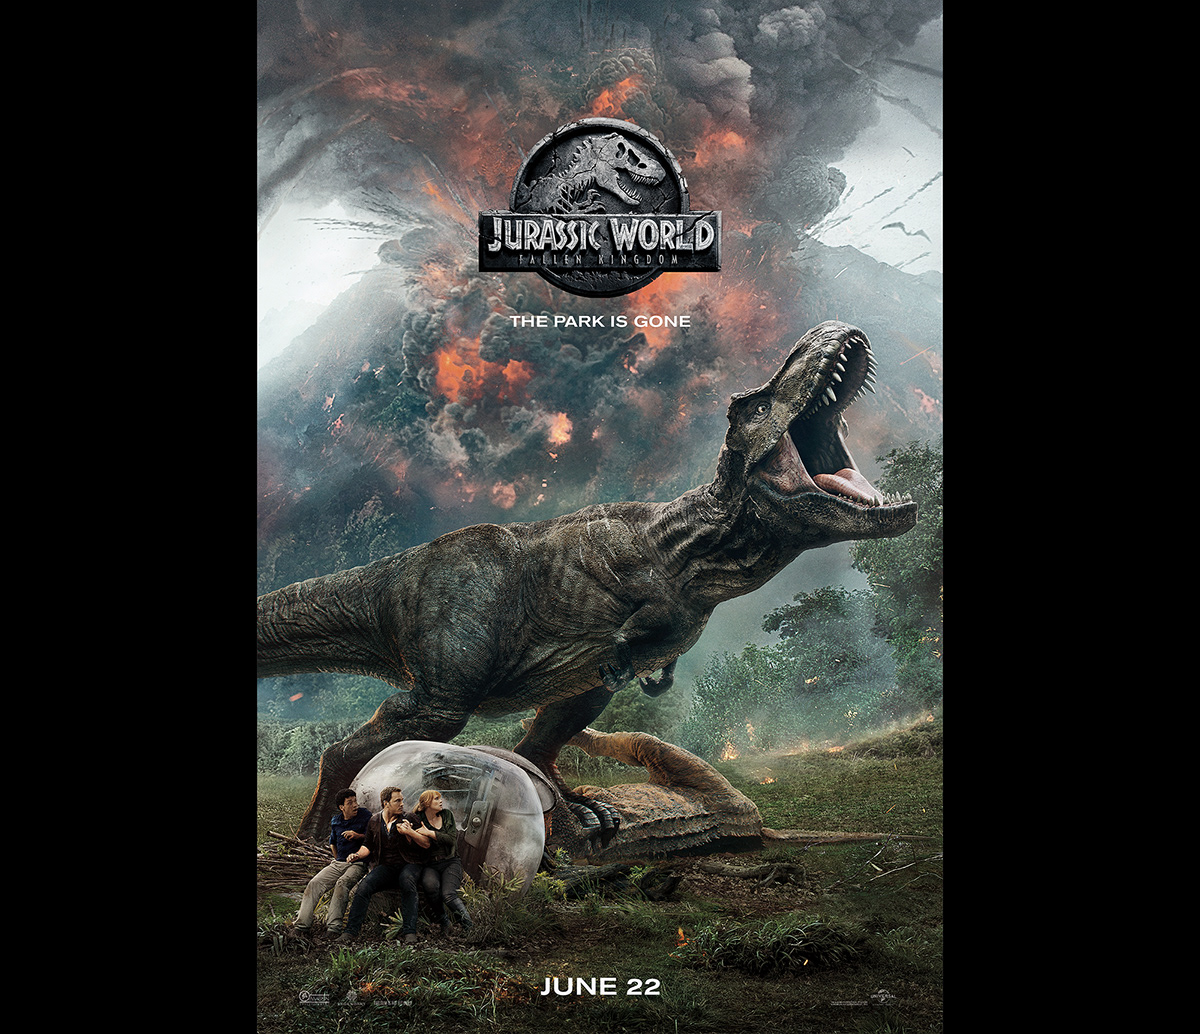 jurassicworld keyart Movies universalpictures stevenspielberg Dinosaur trex poster jurassicpark epic